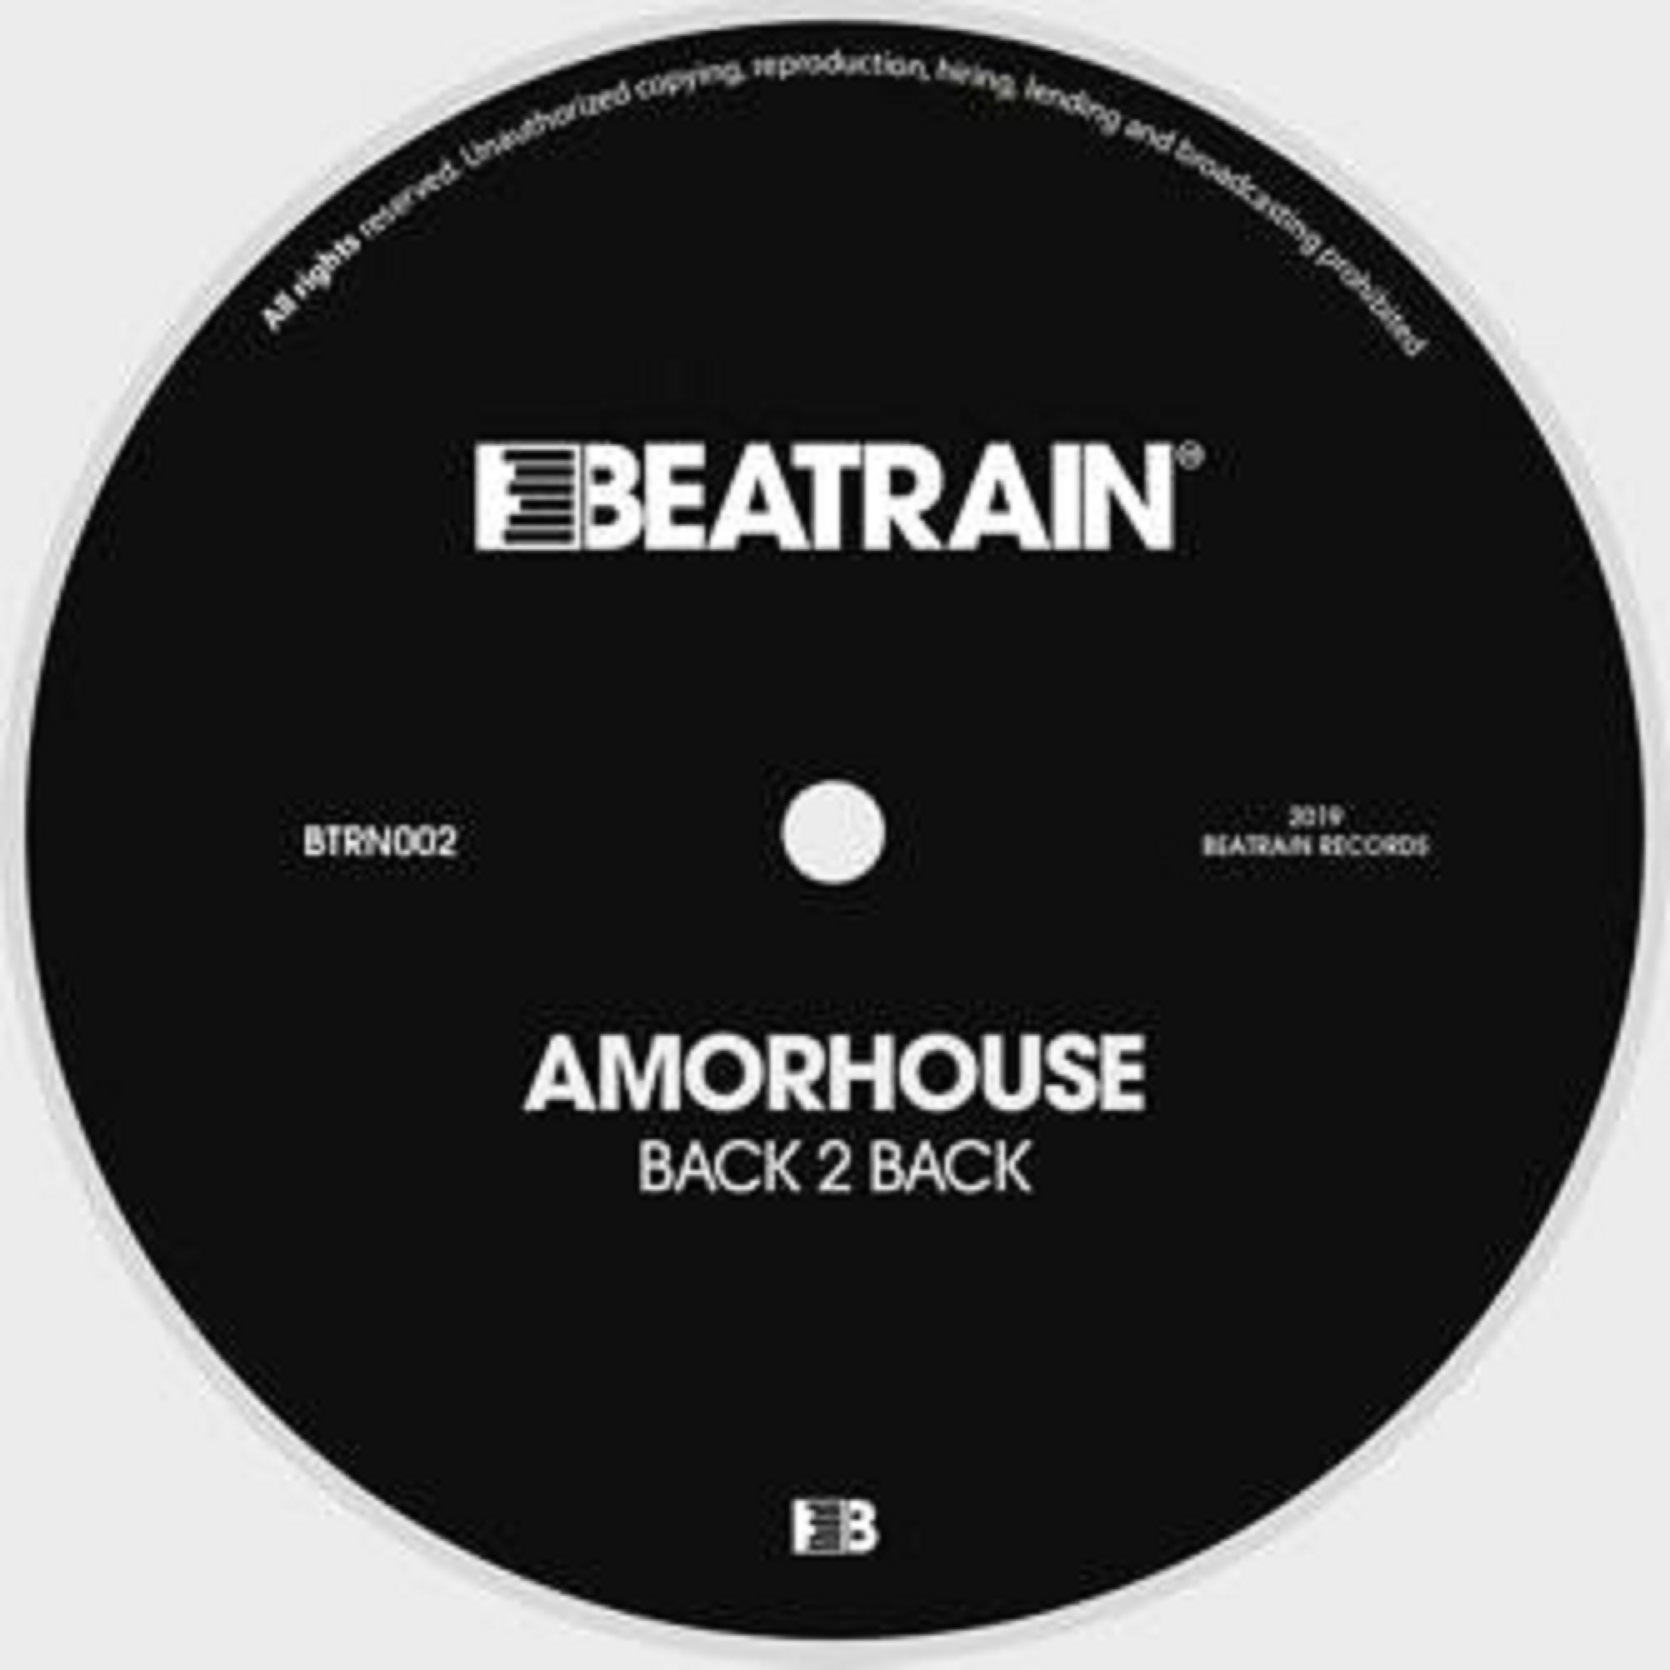 Amorhouse - Back 2 Back [BTRN002]